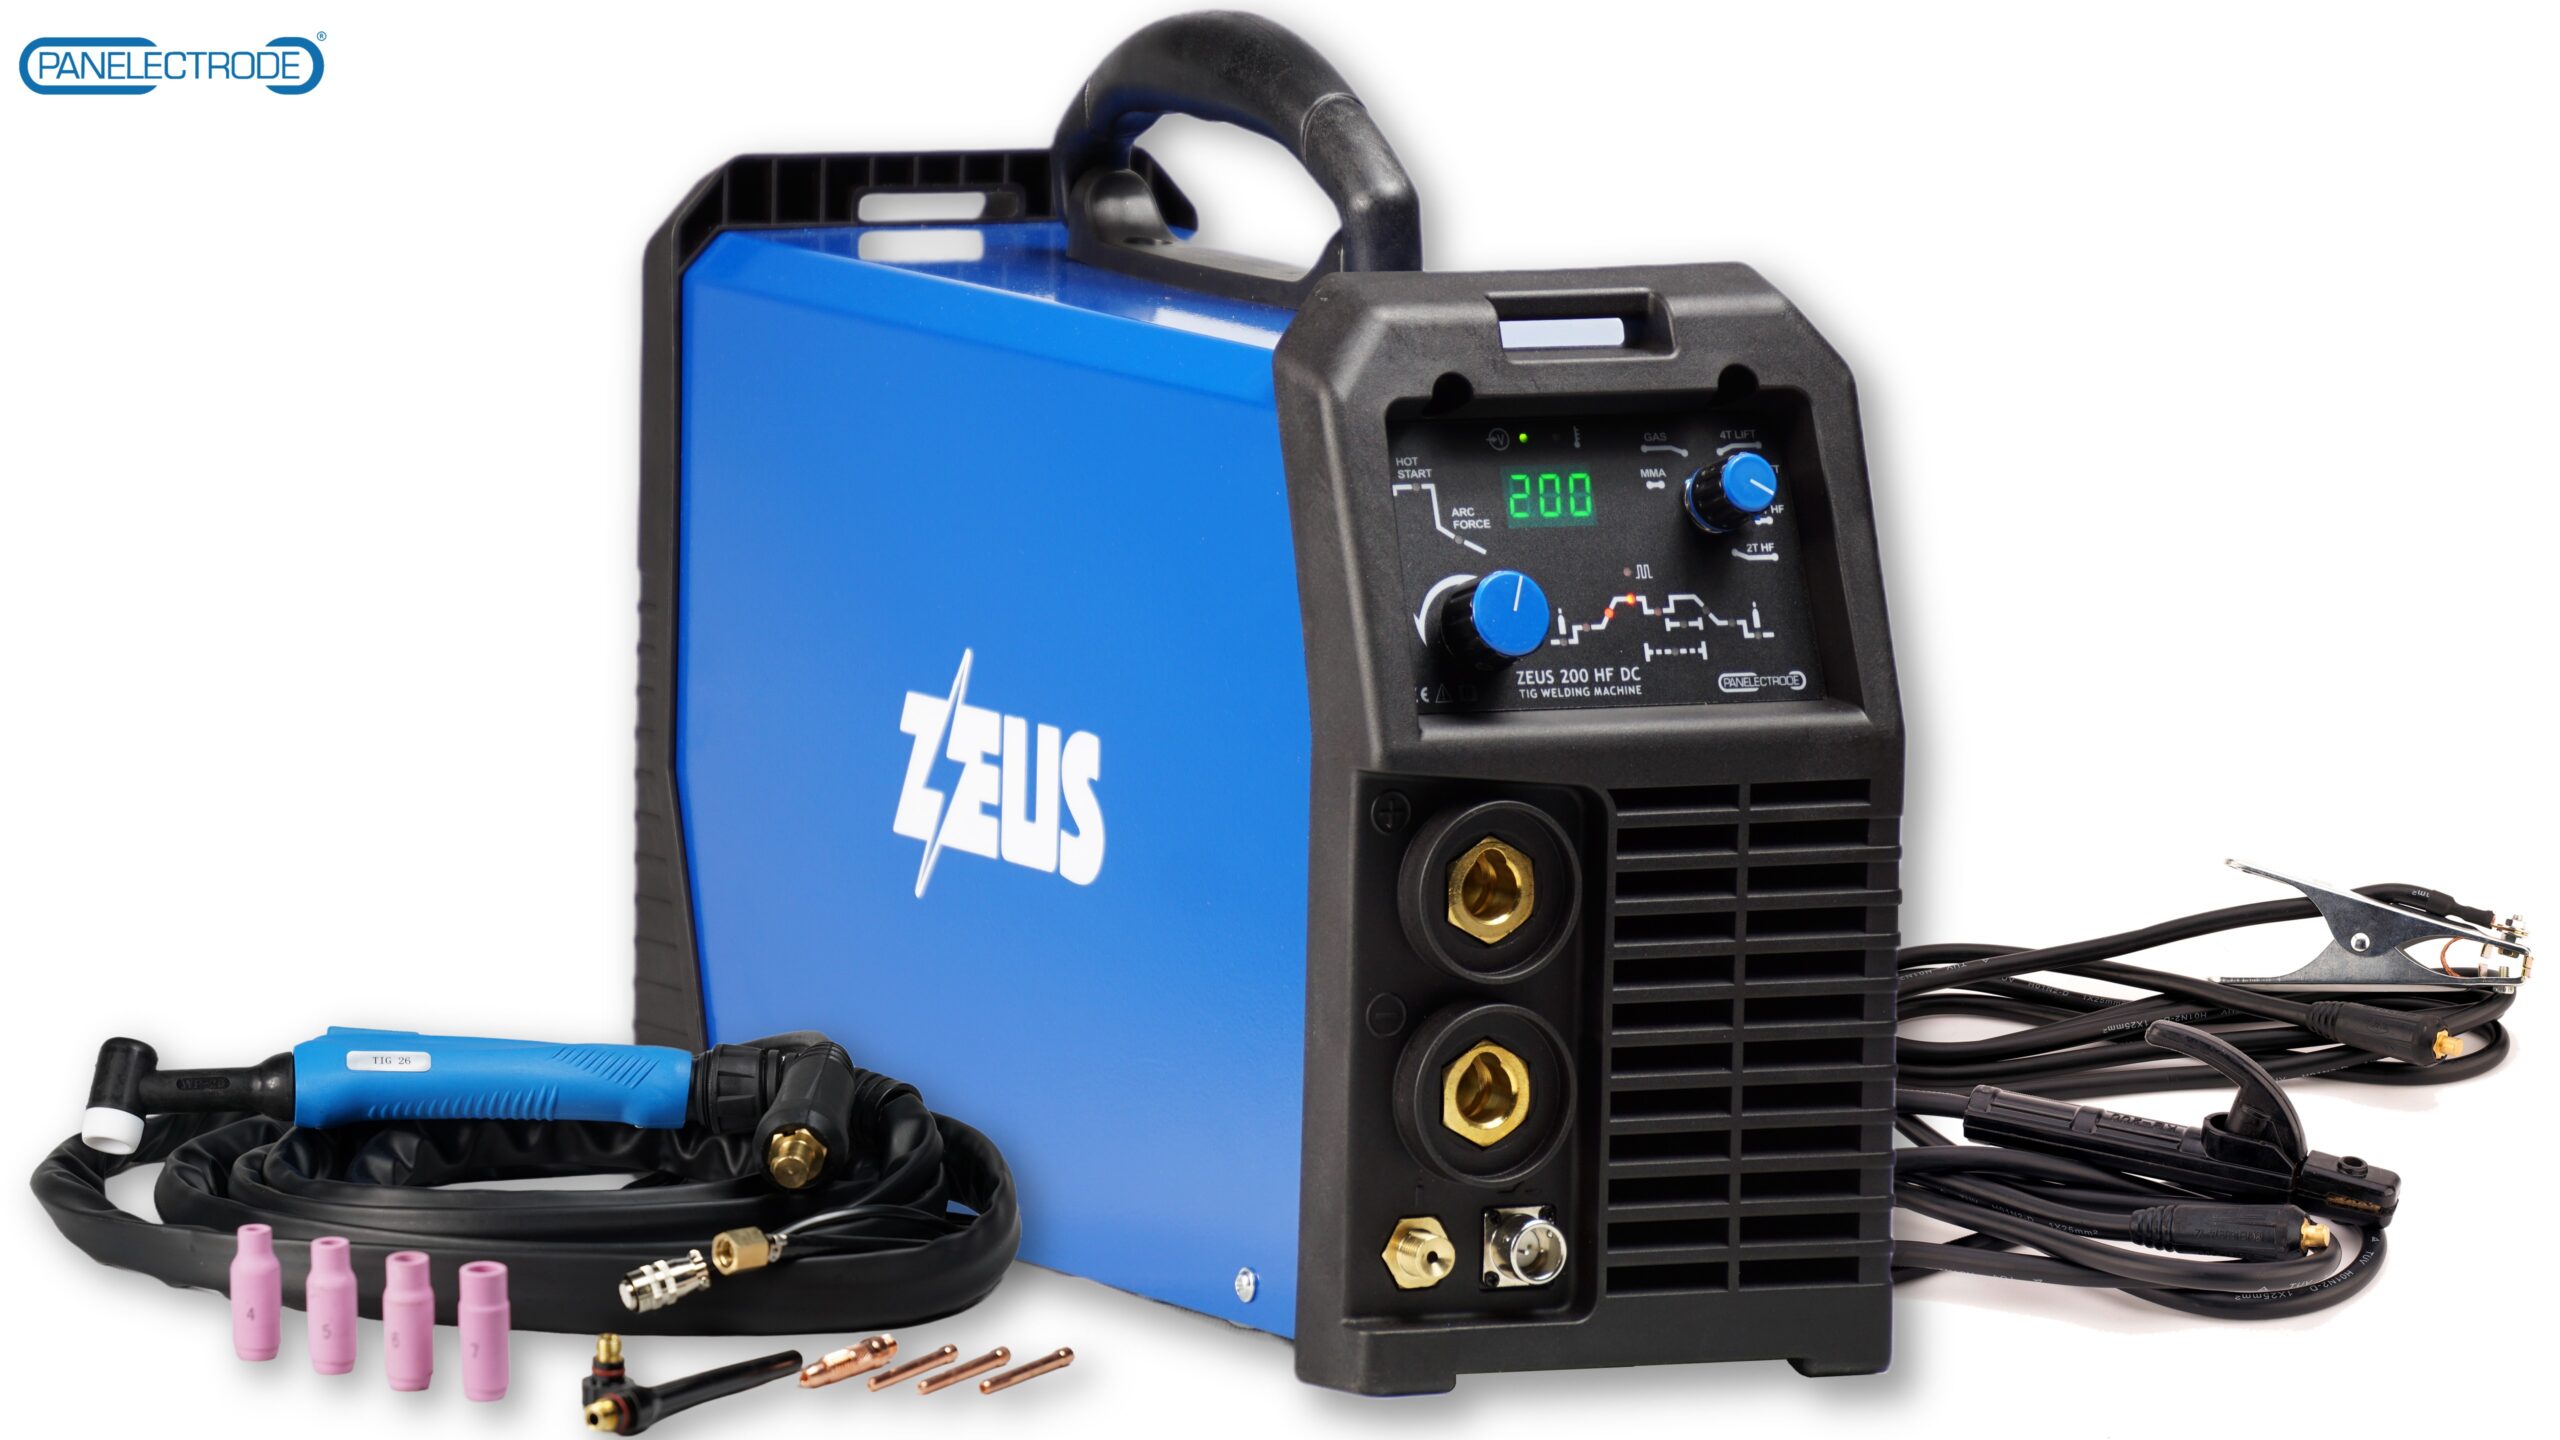 Panelectrode ZEUS 200 HF DC inverteres hegesztőgép